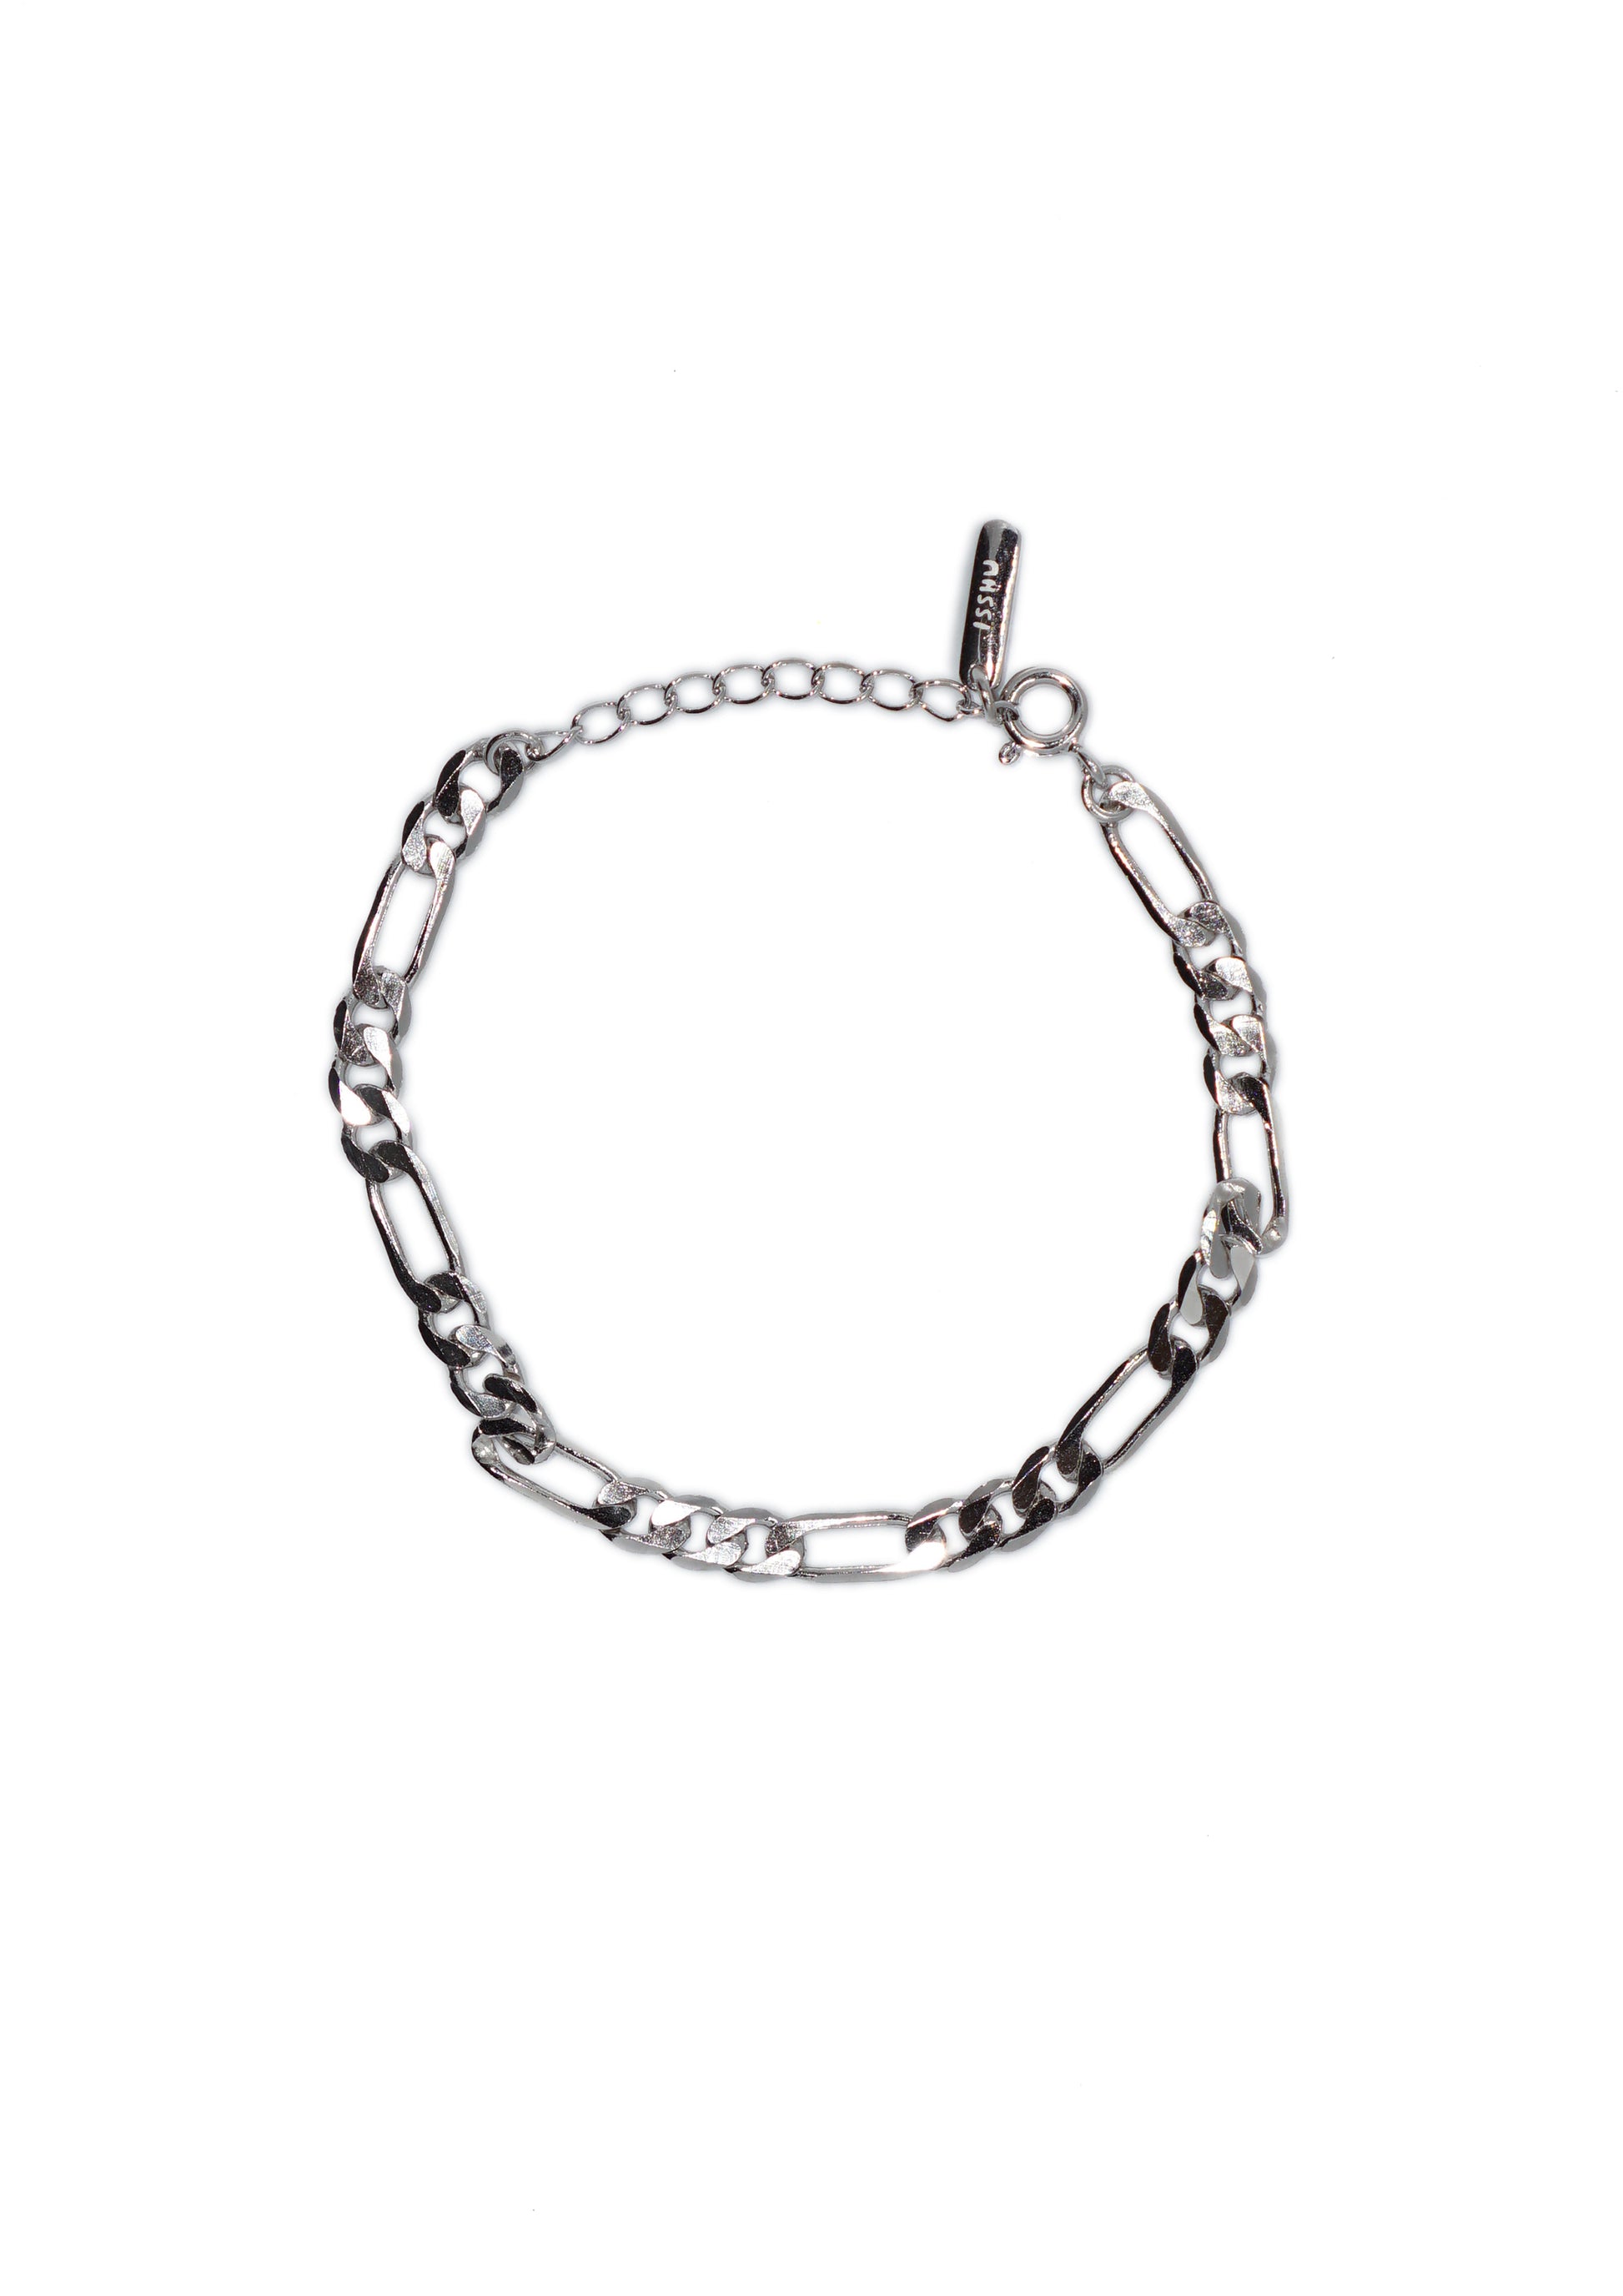 Hashi Silver Bracelet - Catalog - Front View